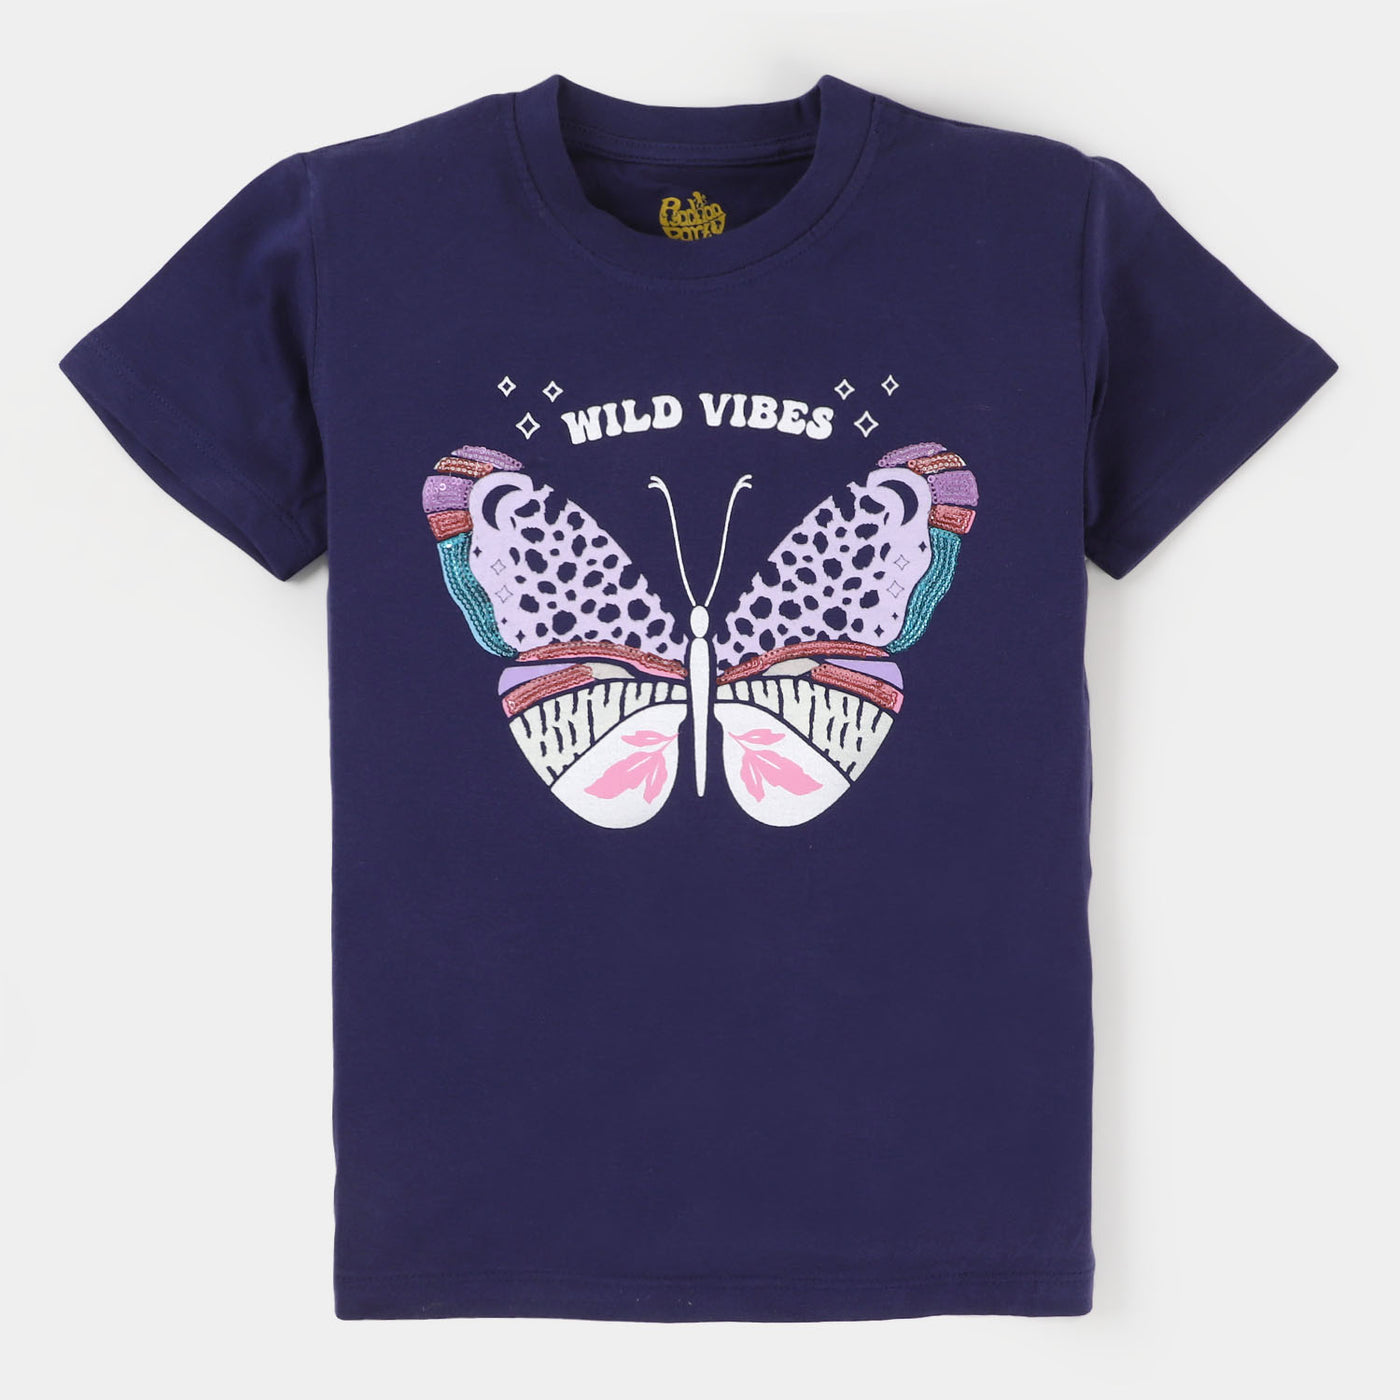 Girls Cotton T-Shirt Wild Vibes - NAVY